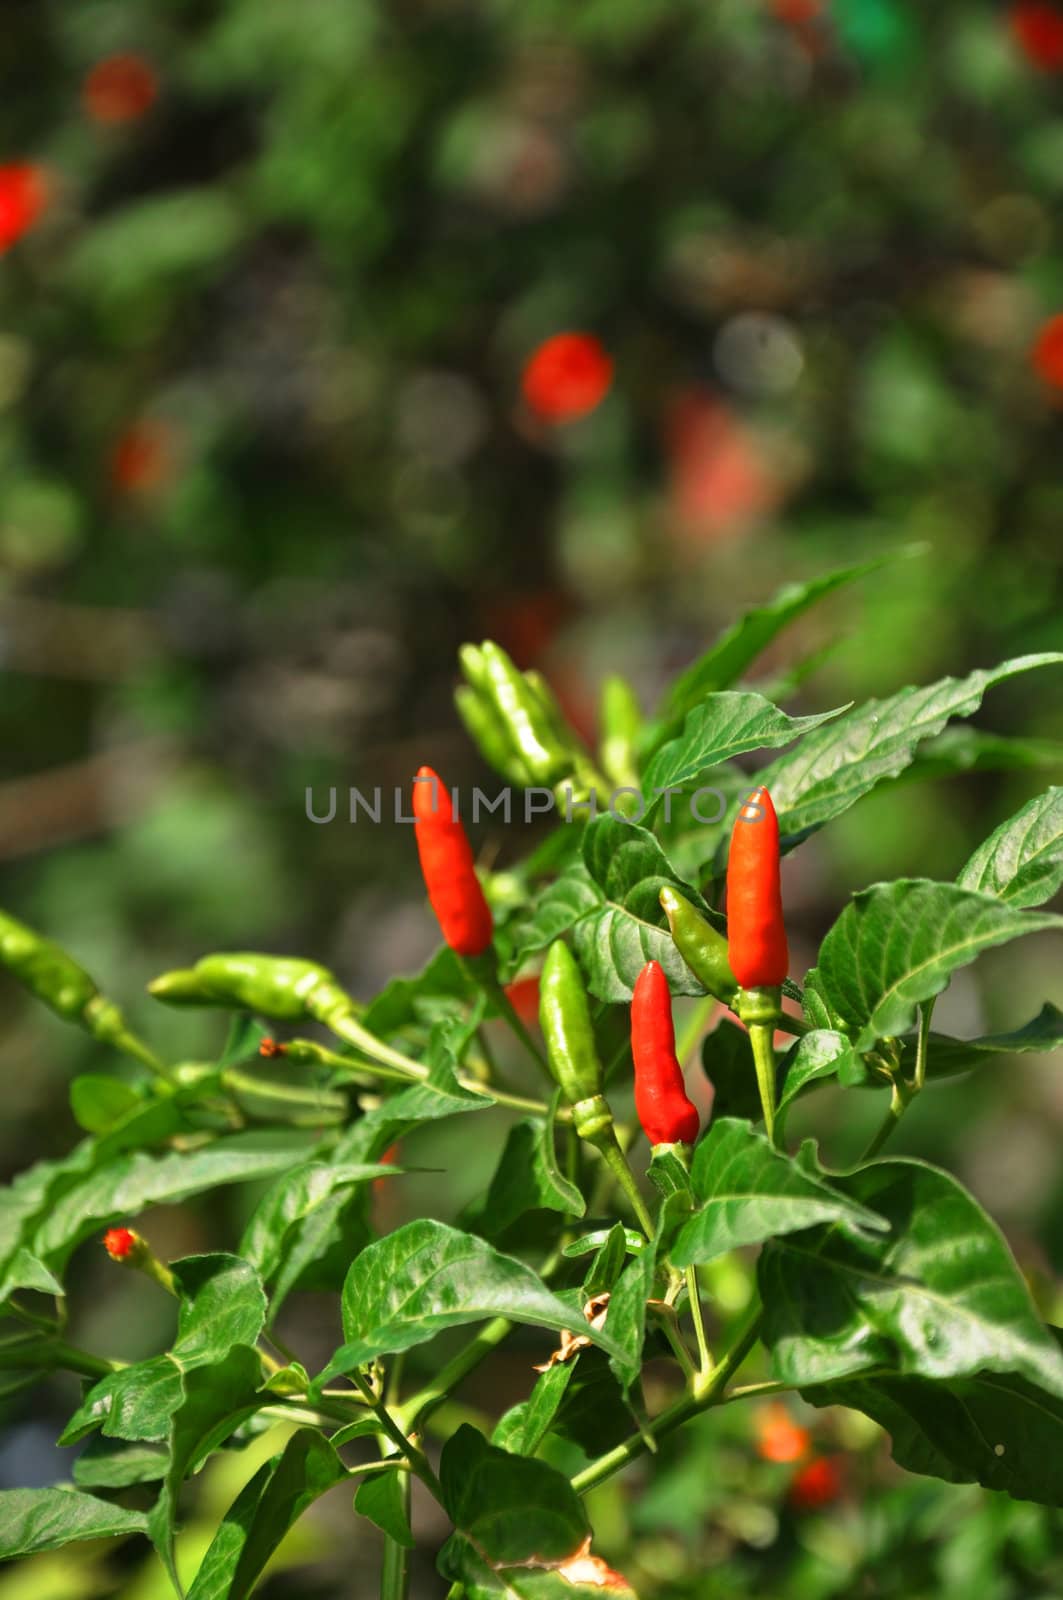 Chili pepper plant by bigjom